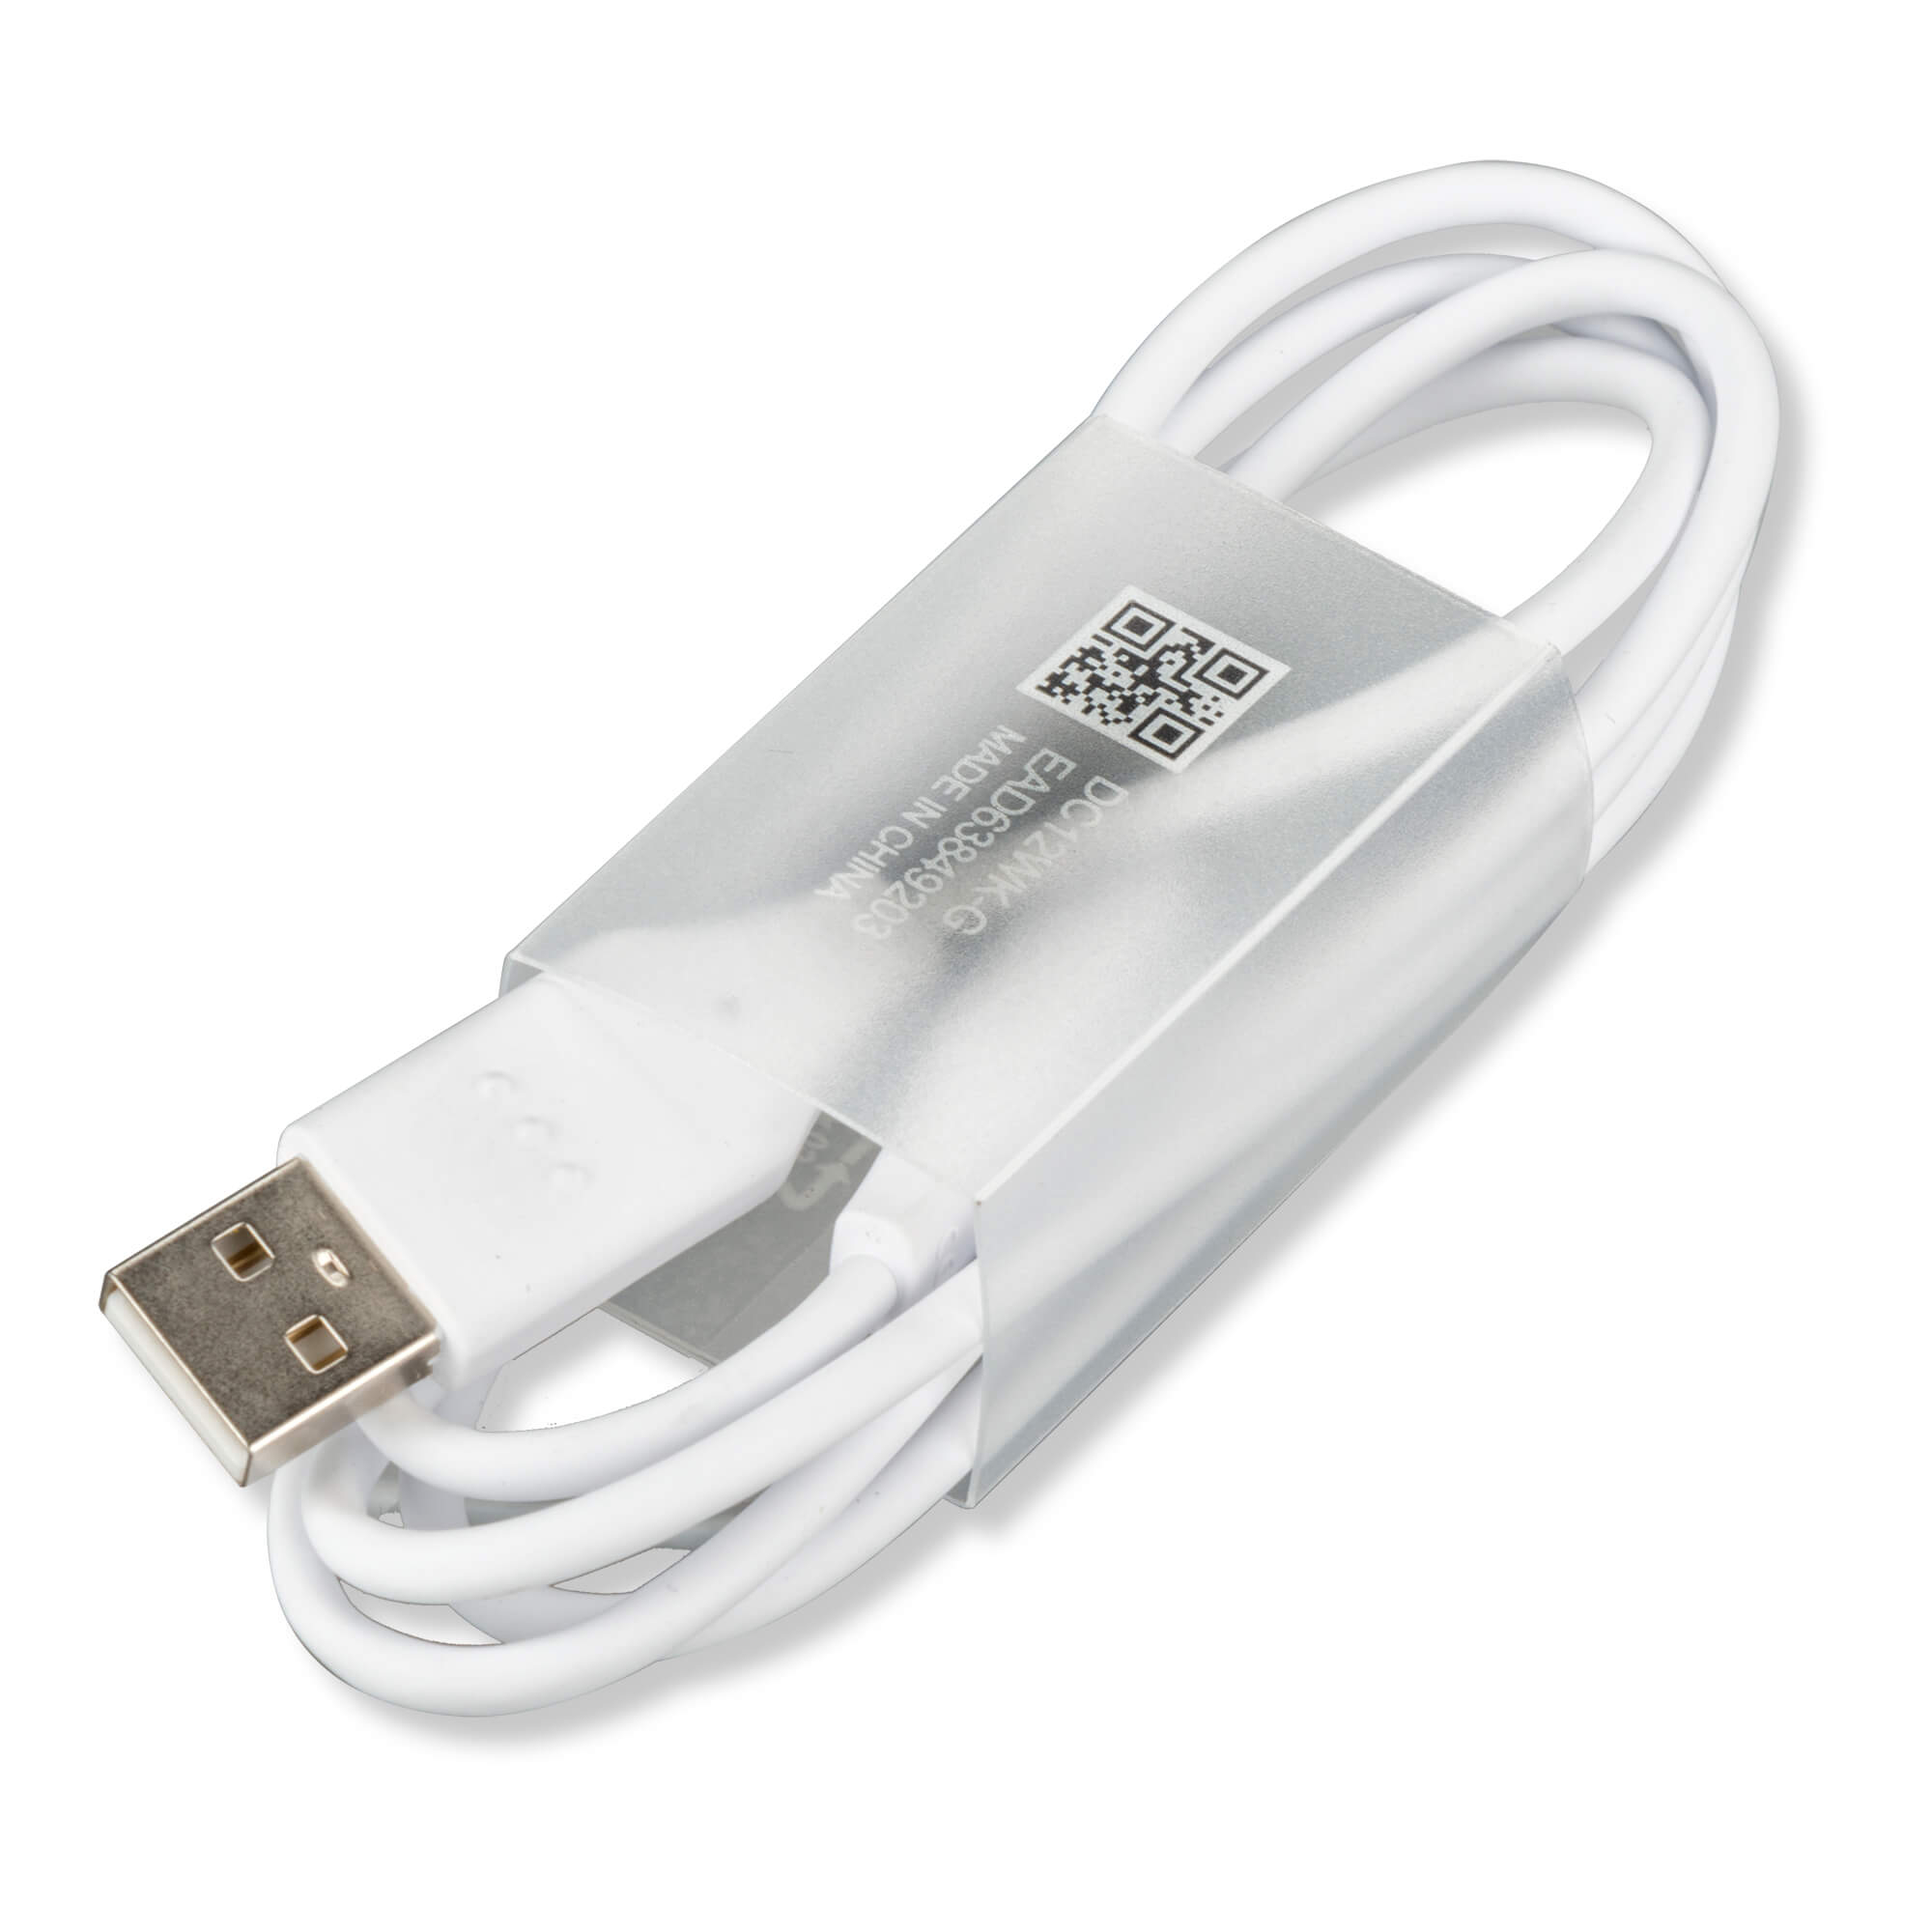 Lg usb c. Dc12wk-g кабель USB. USB Cable for 4g 5g. Кабель LG. 50pk560 LG USB Port.